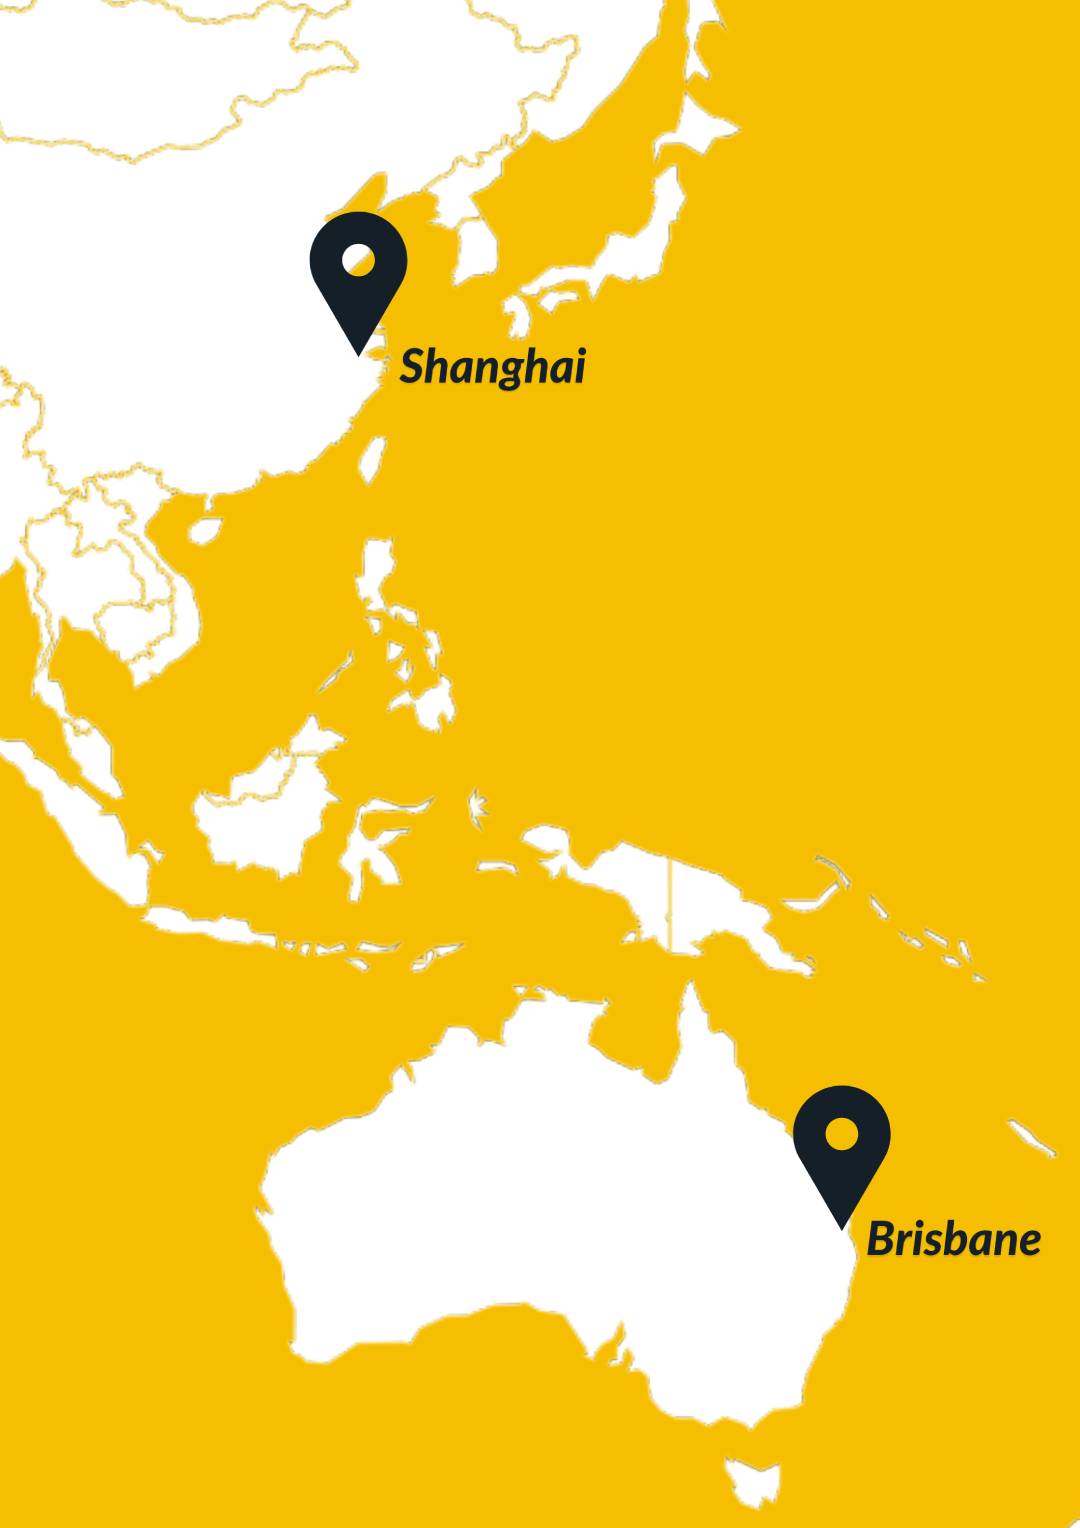 Brisbane and Shanghai map